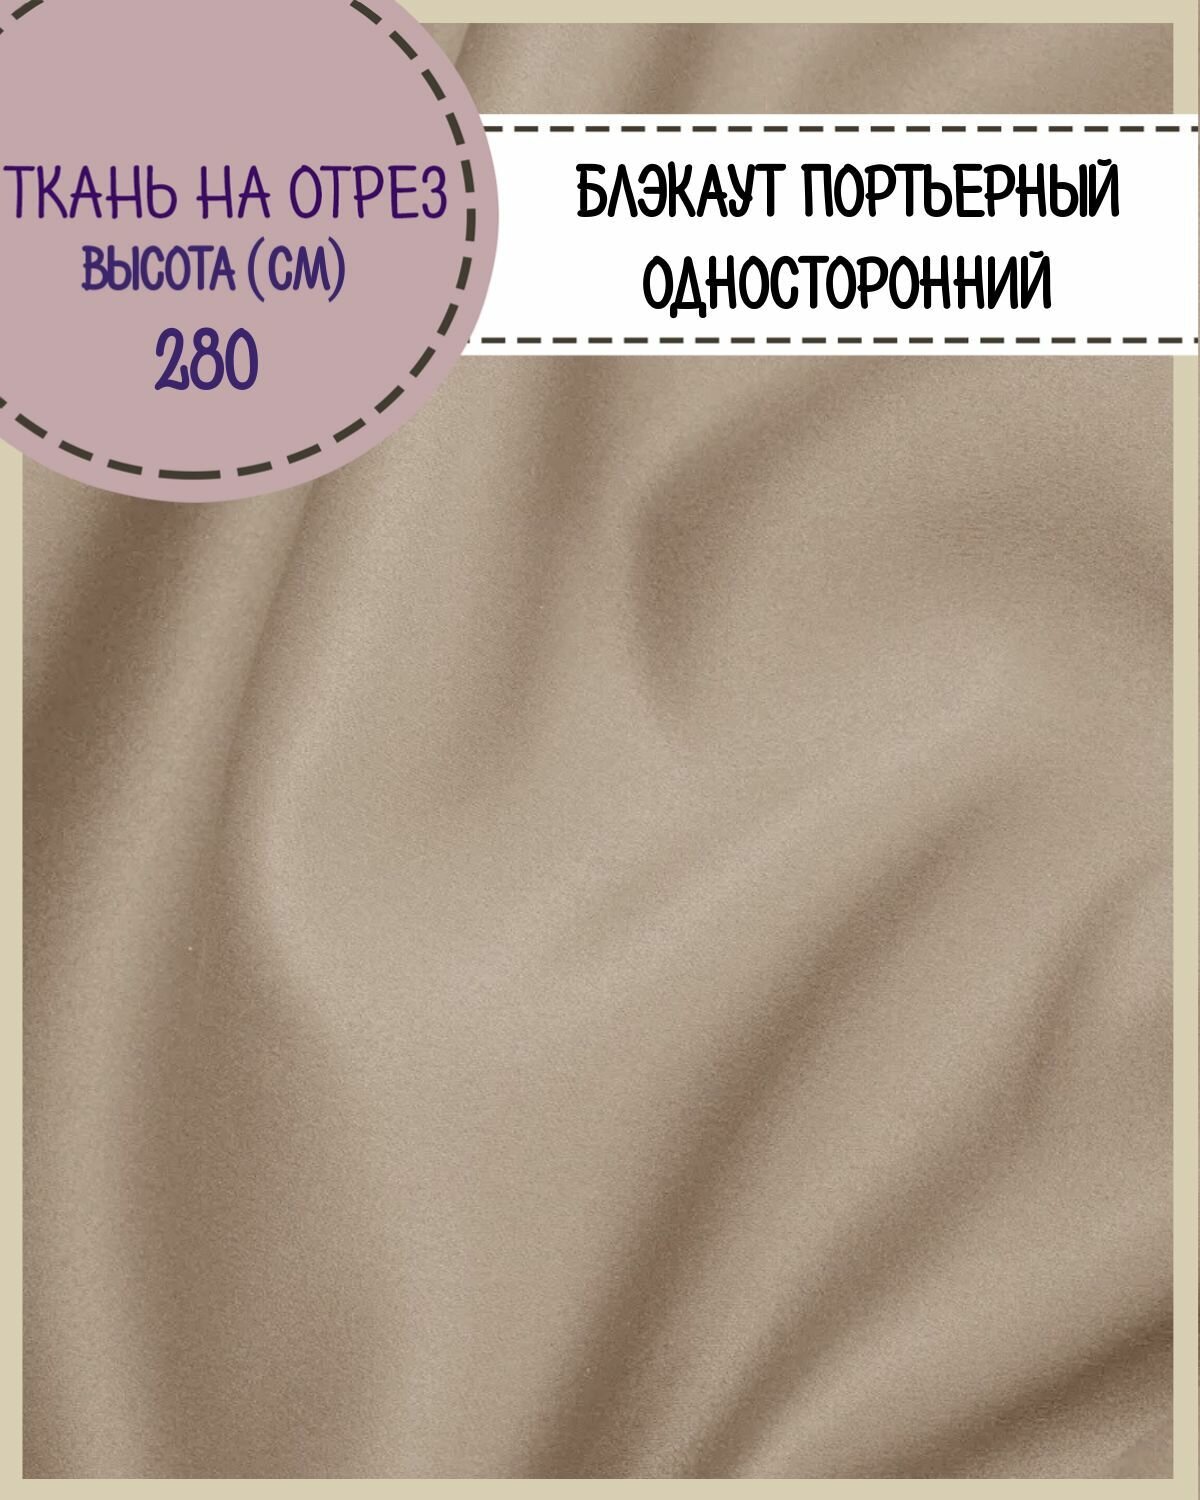 Ткань портьерная Блэкаут односторонний для штор, цв. бежевый, на отрез, цена за пог. метр